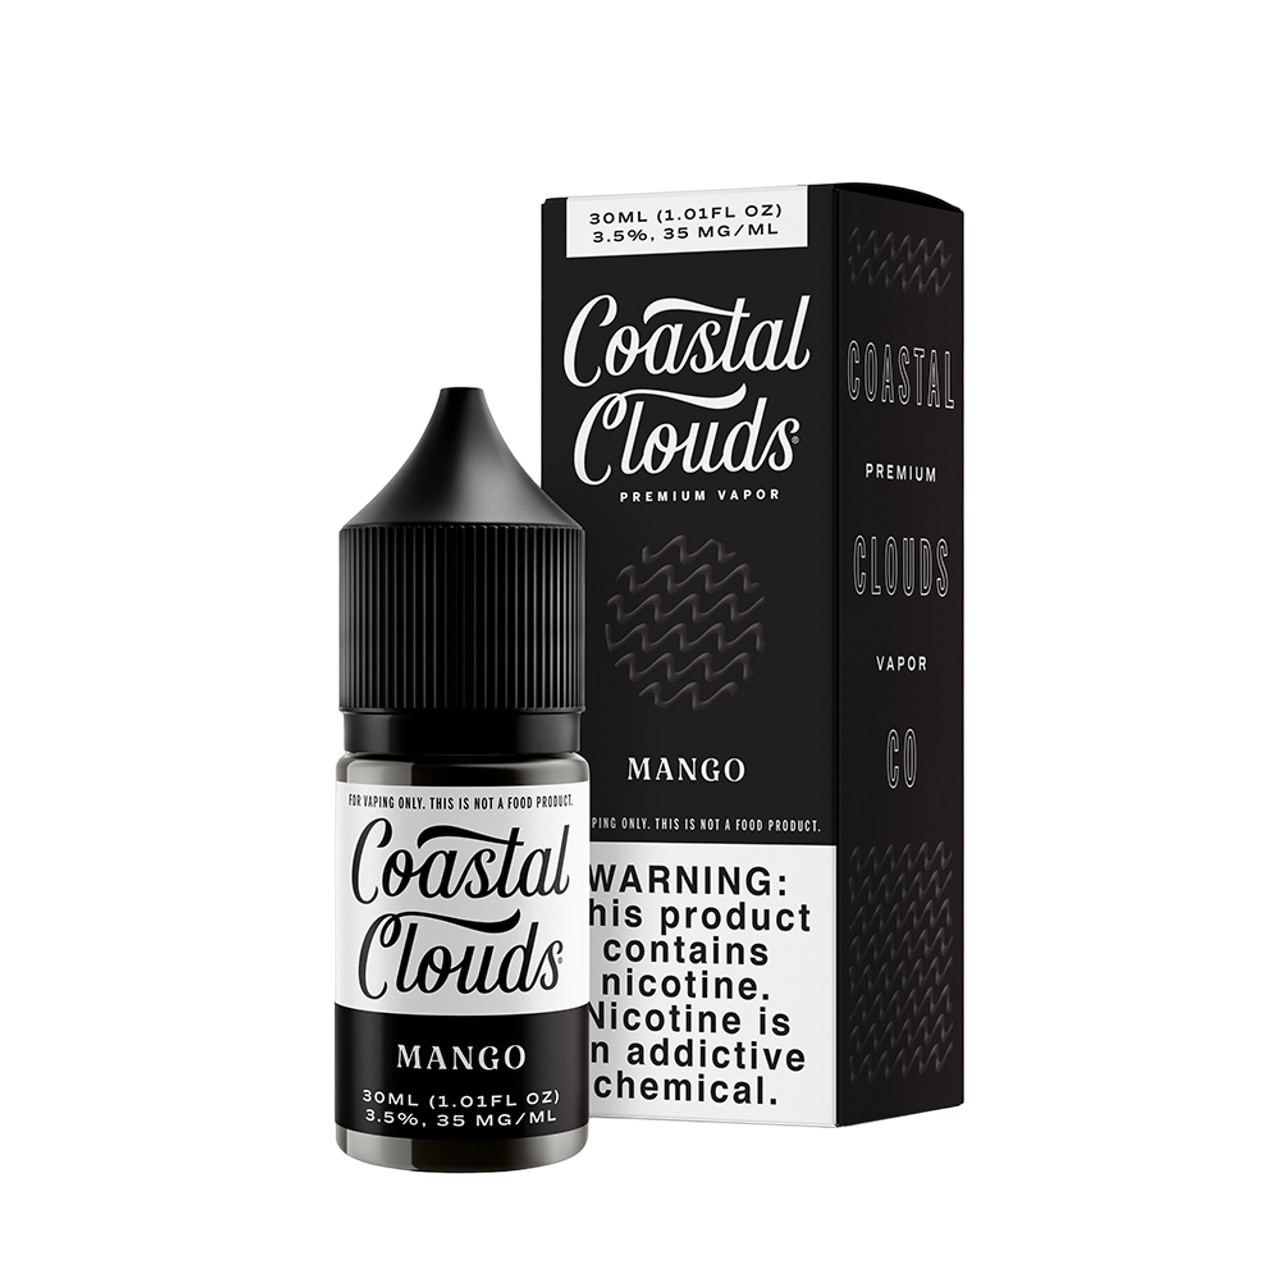 Coastal Clouds Premium Vapor Nicotine Salt E-Liquid 30ML Mango